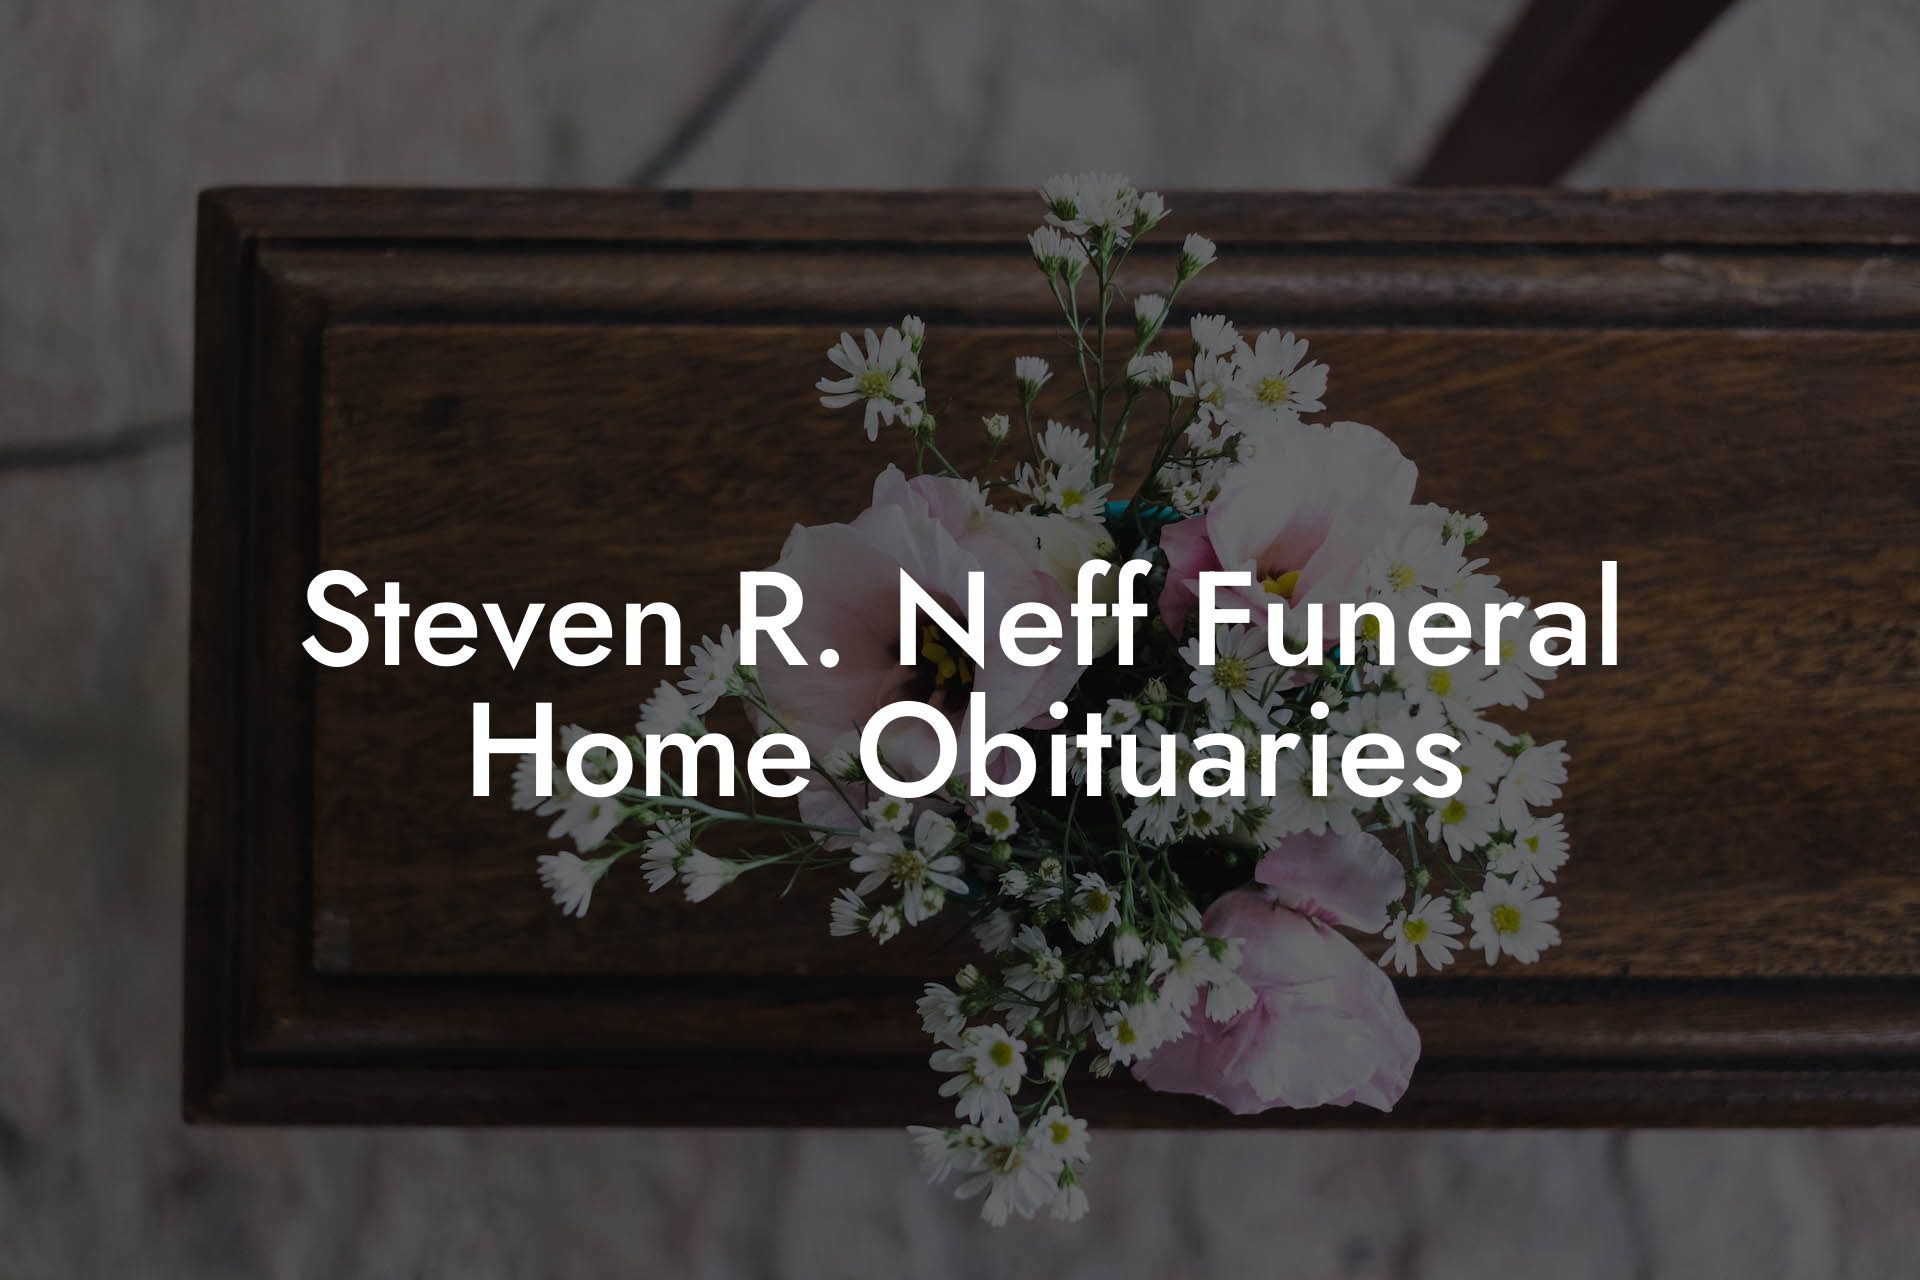 Steven R. Neff Funeral Home Obituaries